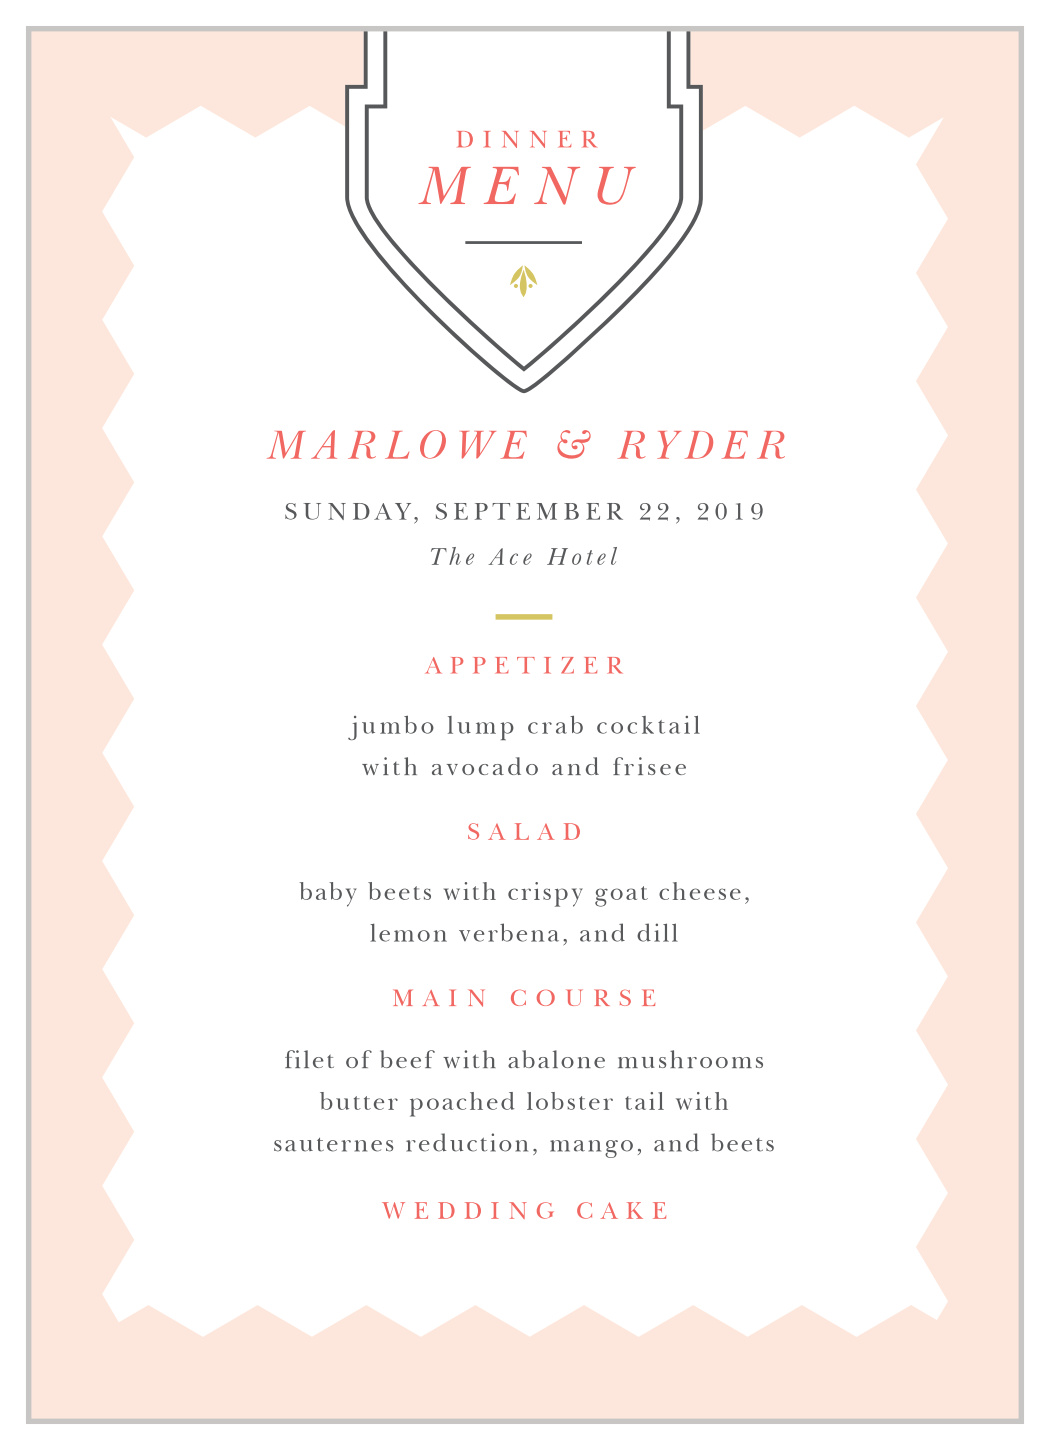 MaeMae's Marlowe Wedding Menus